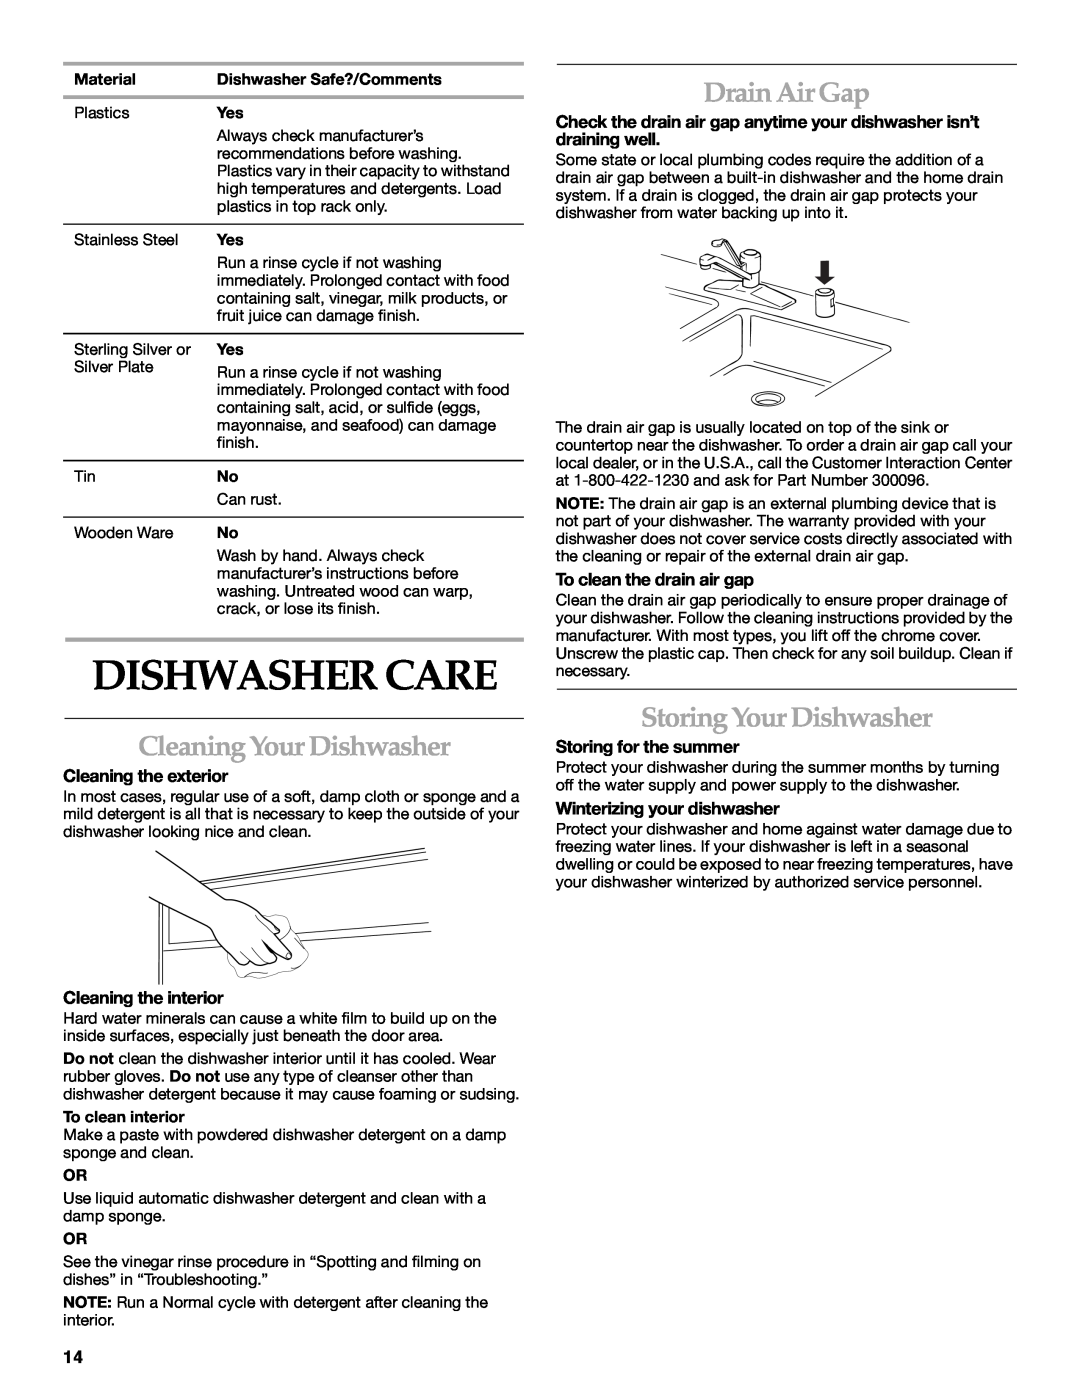 KitchenAid KUDM01TJ manual Dishwasher Care, Cleaning Your Dishwasher, Drain Air Gap, Storing Your Dishwasher 